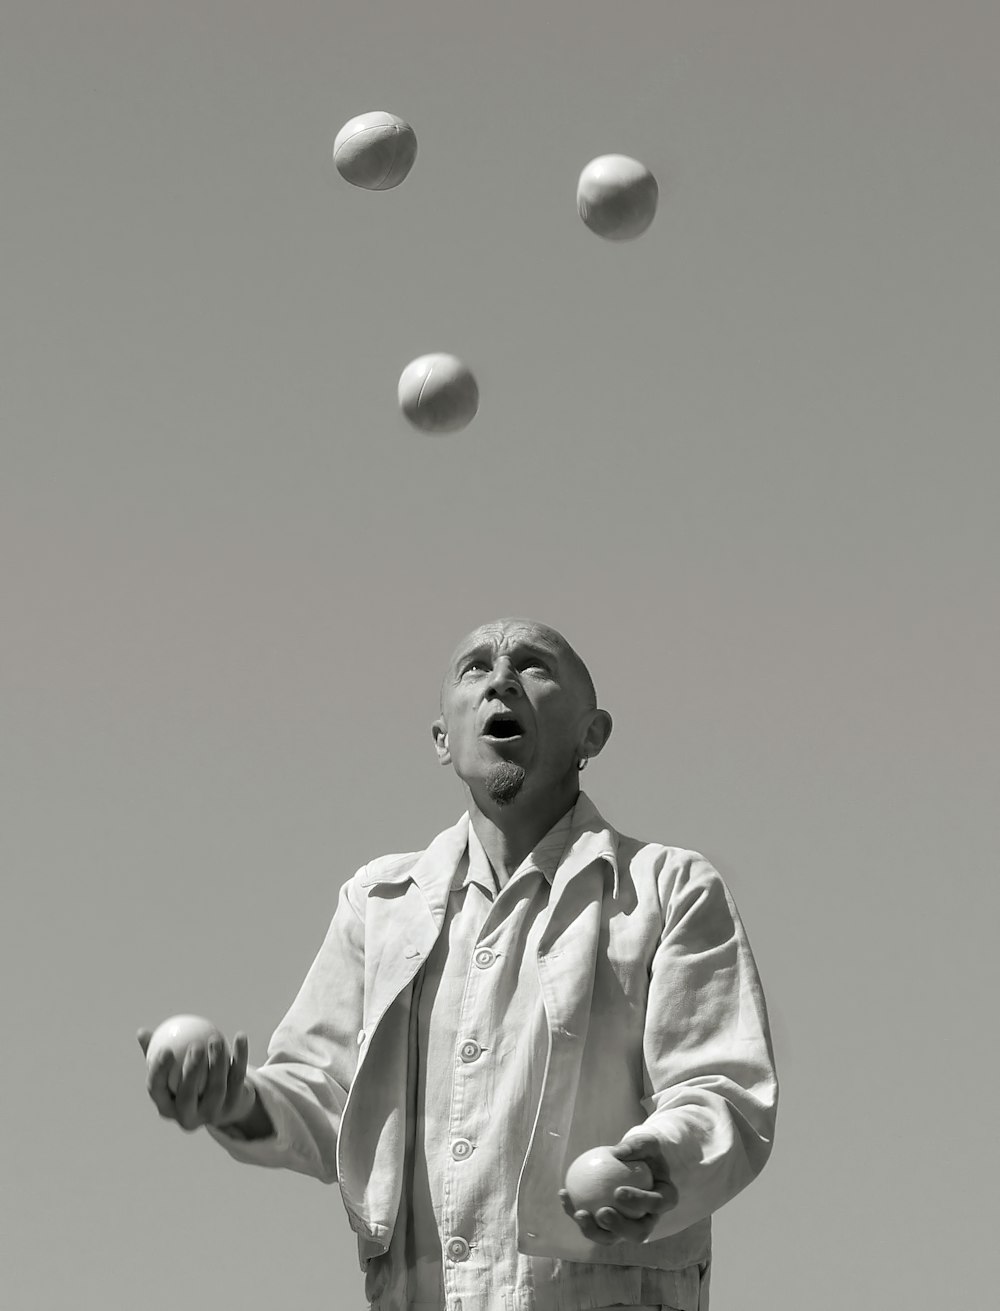 a man juggling balls into the air